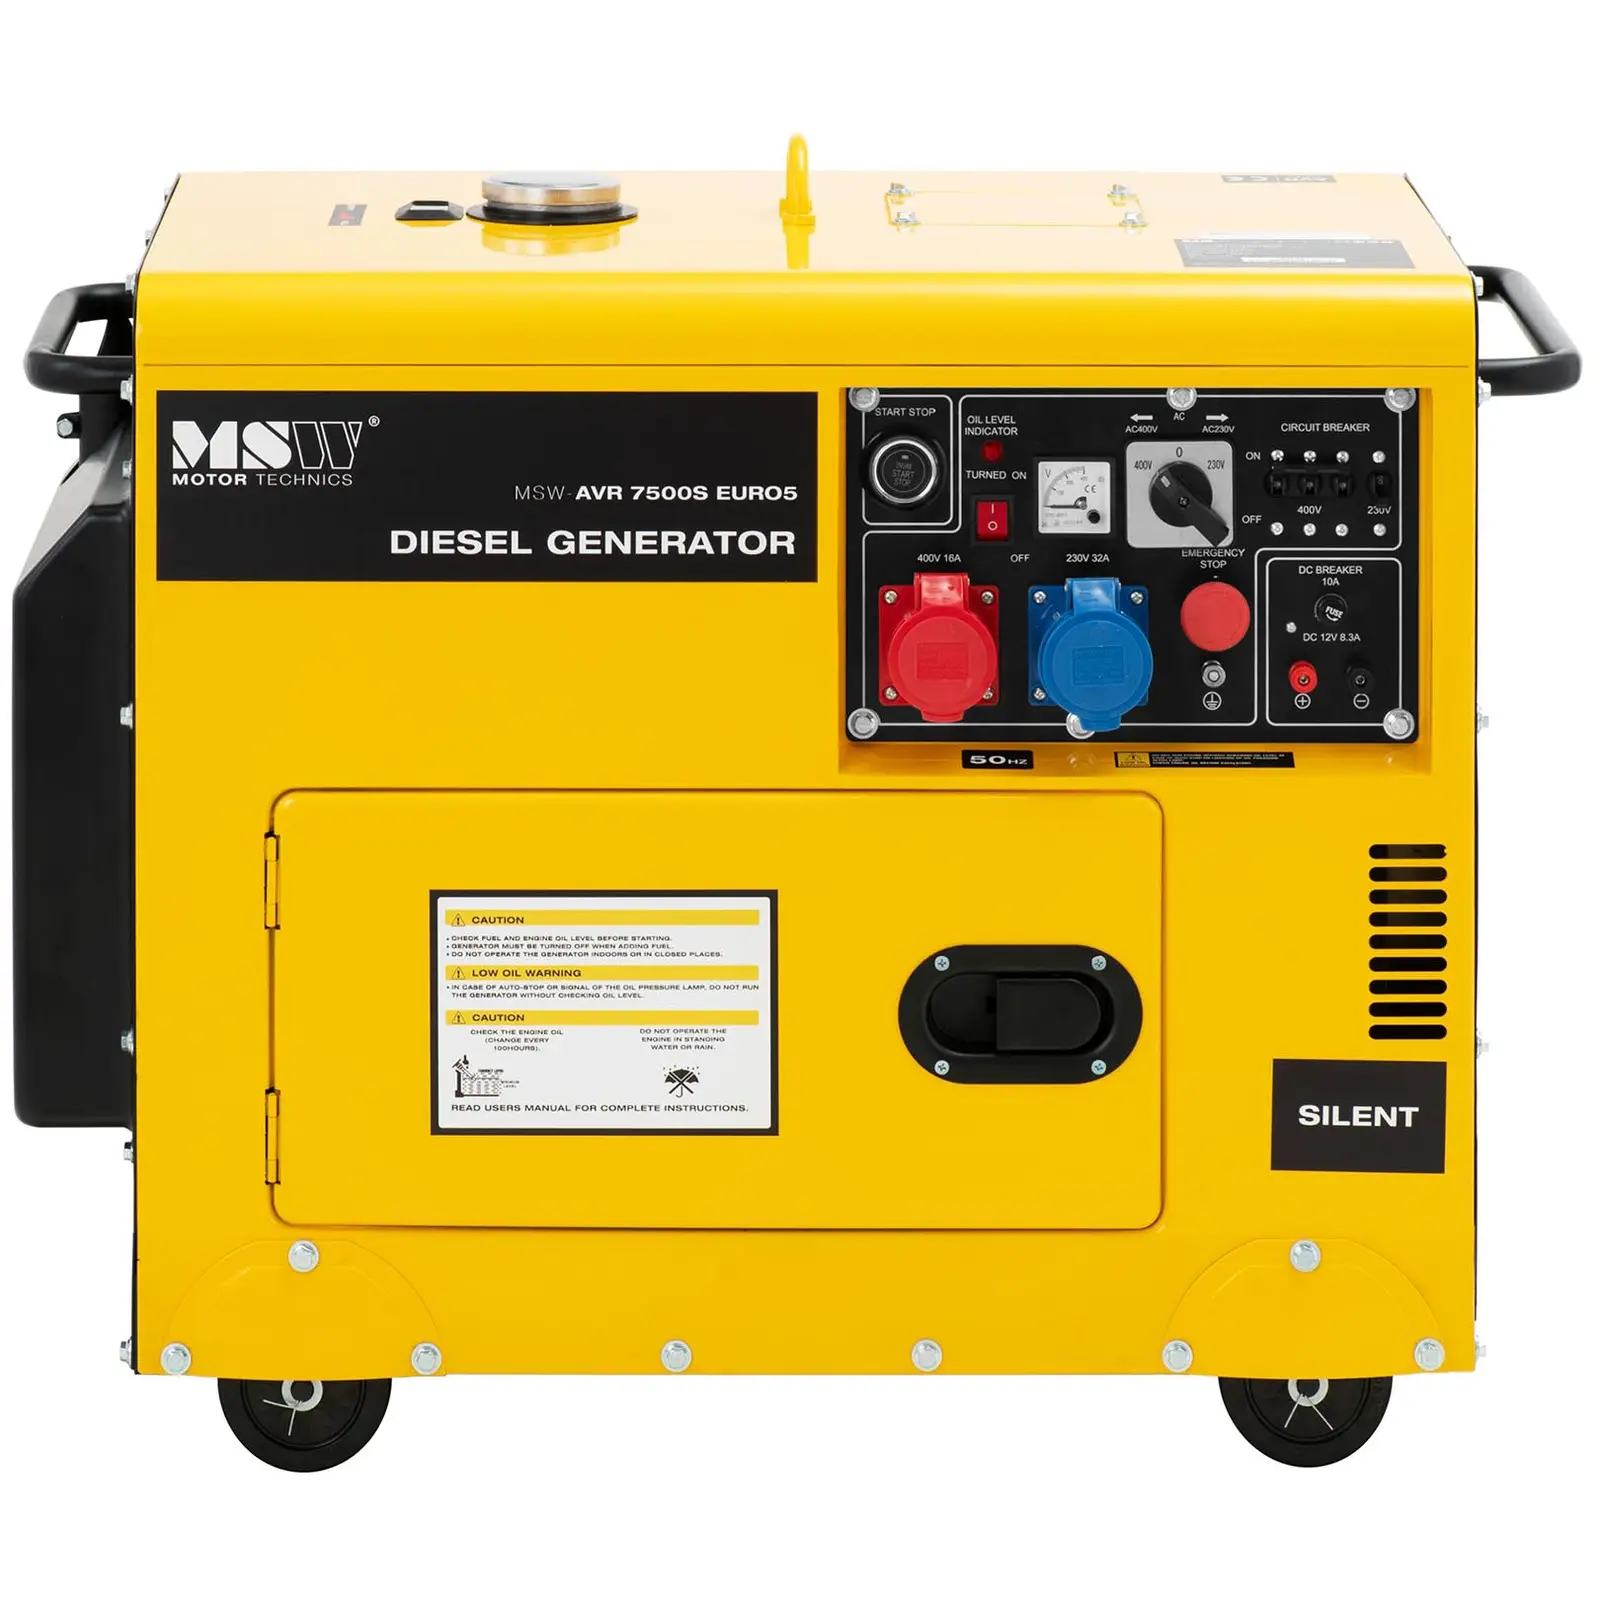 Notstromaggregat Diesel - 6370 / 7500 W - 16 L - 230/400 V - mobil - AVR - Euro 5